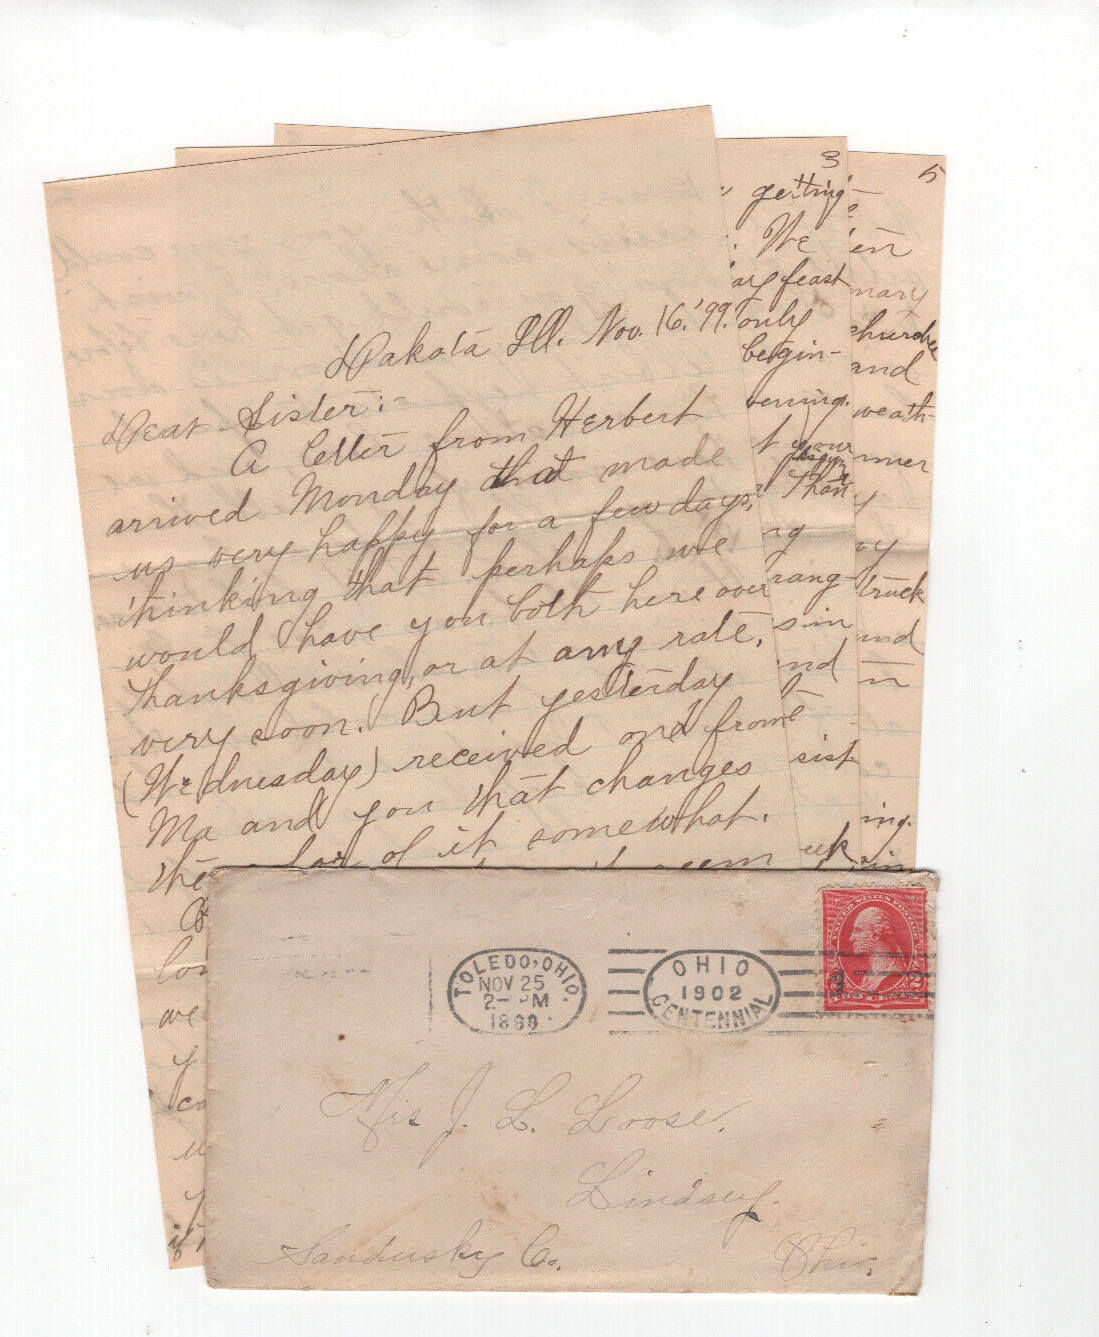 Antique 1899 Handwritten Letter Dakota Illinois Small Talk Church Life and Times